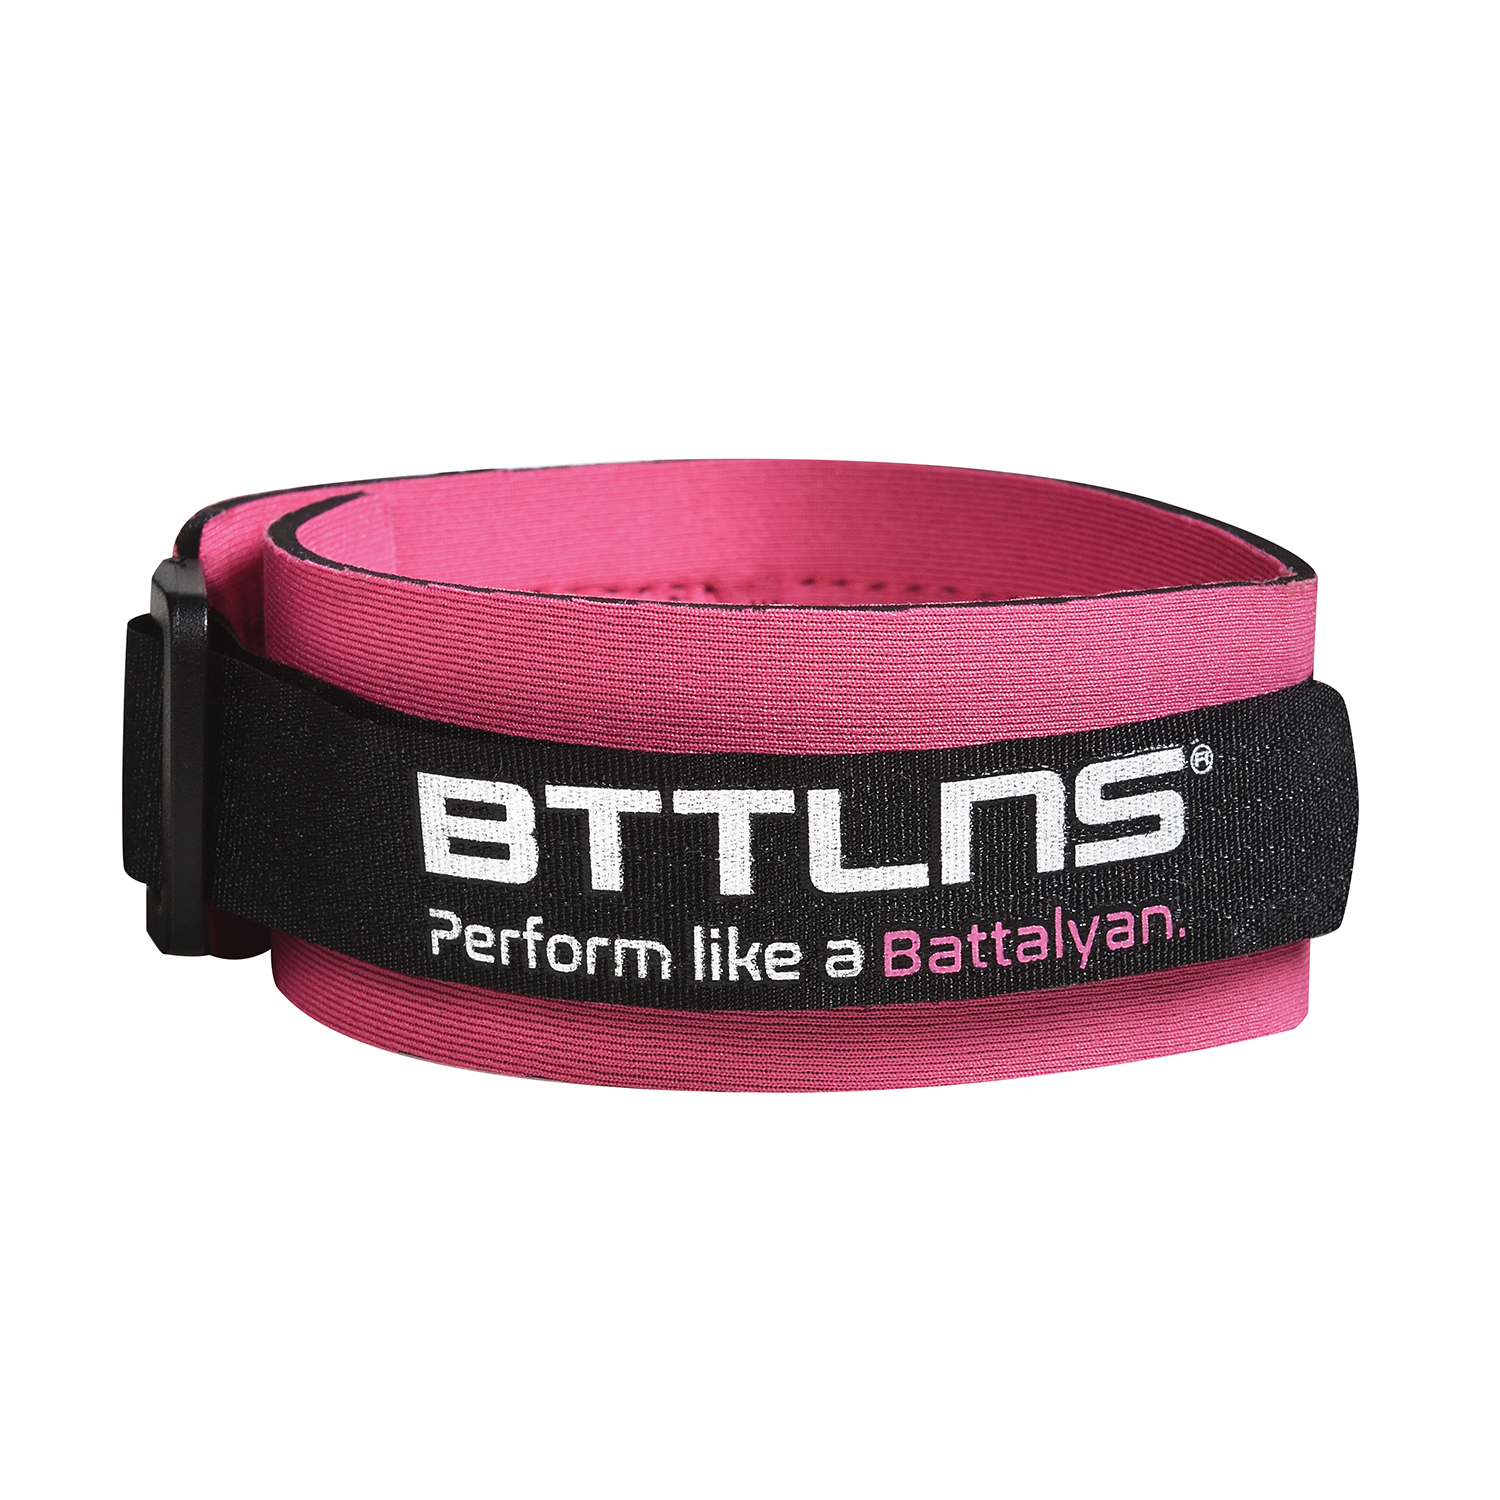 BTTLNS Timing chip strap Achilles 2.0 pink  0318002-072